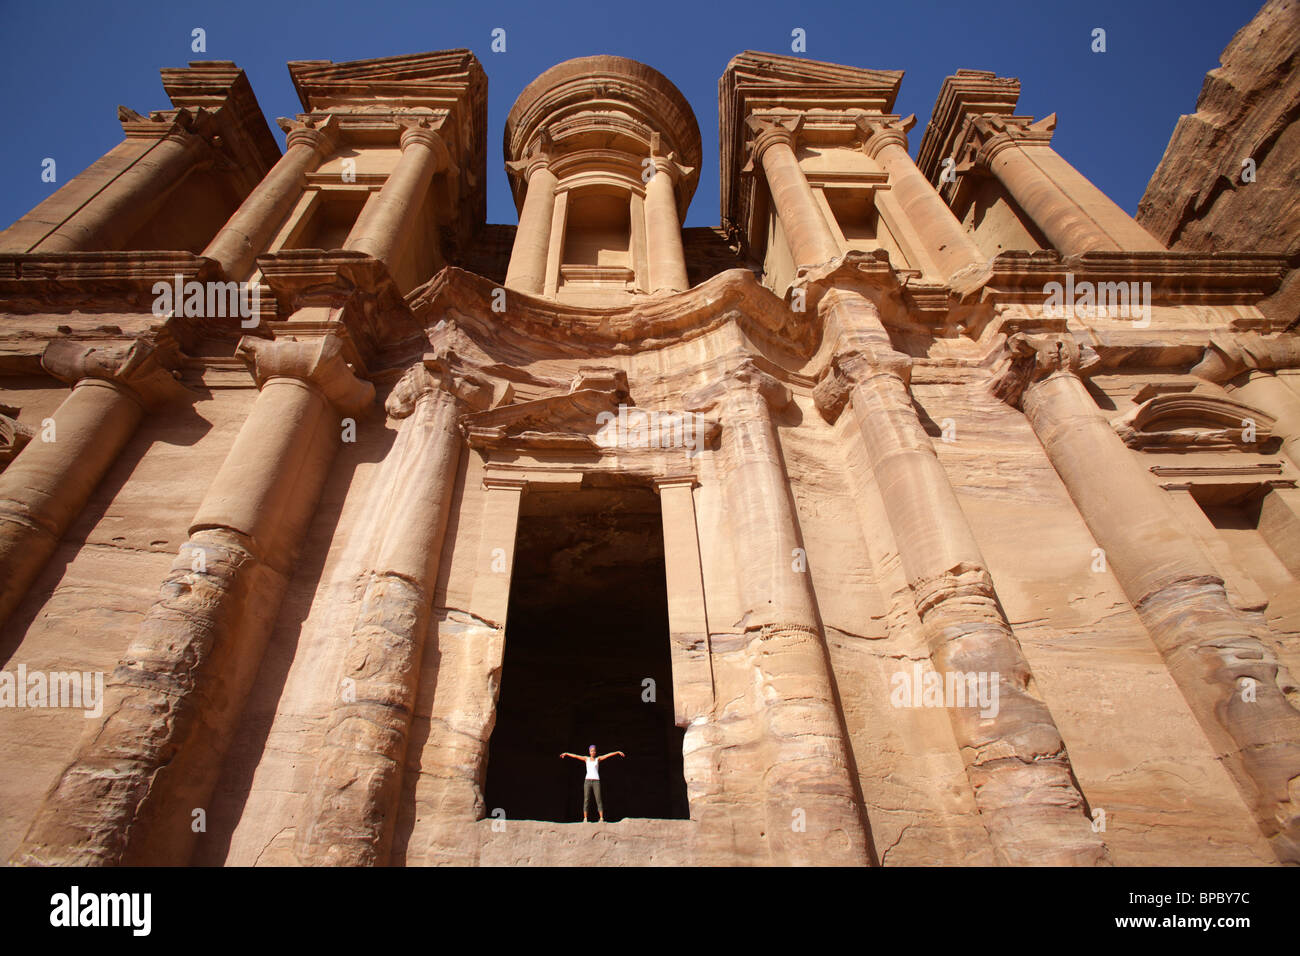 El Deir (or Monastery), Petra, Jordan Stock Photo - Alamy